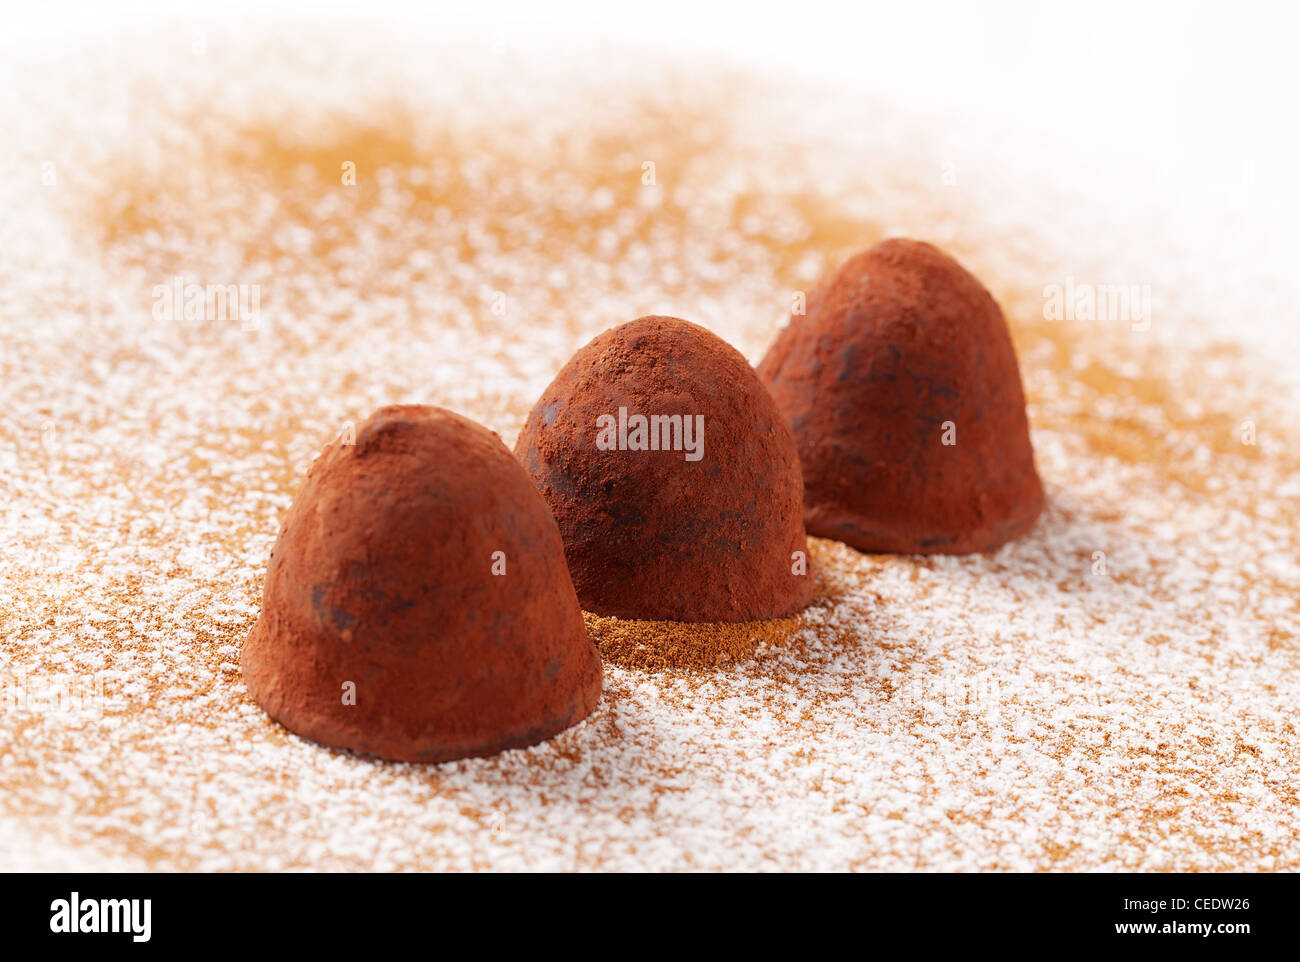 Chocolate truffles coated in cocoa powder Stock Photo